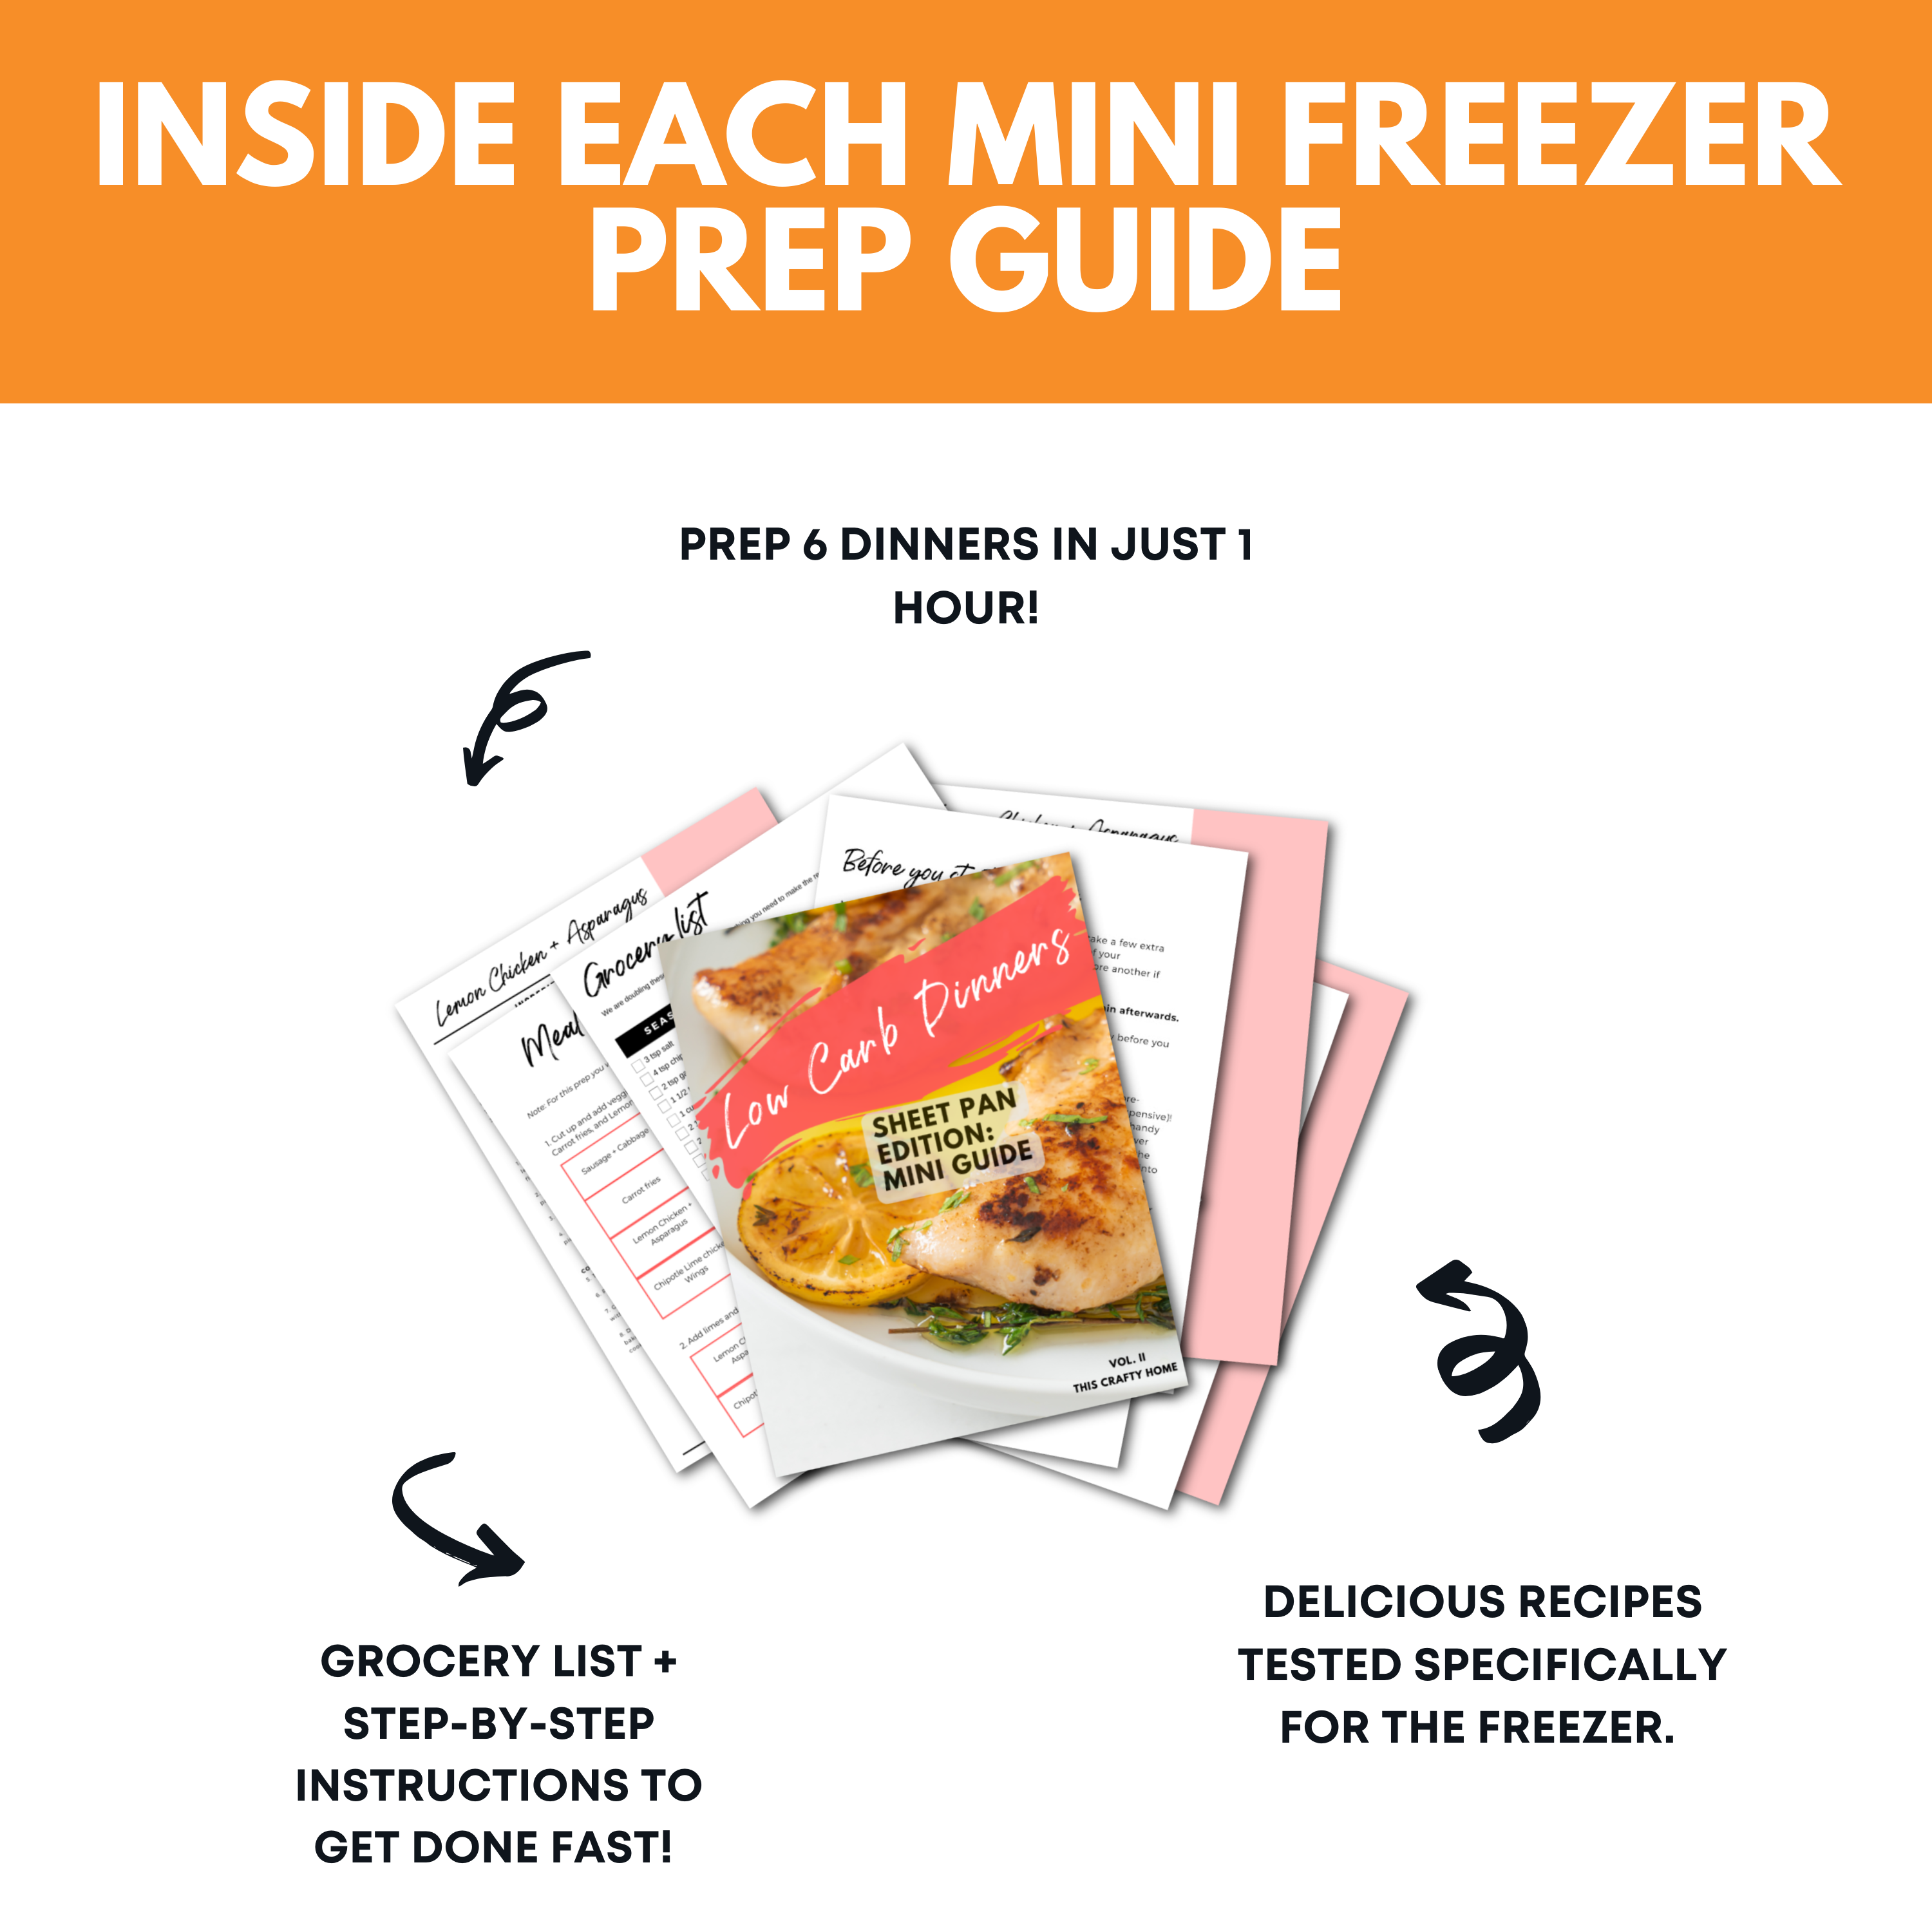 Low Carb Dinners: Sheet pan edition Mini Freezer Prep Guide